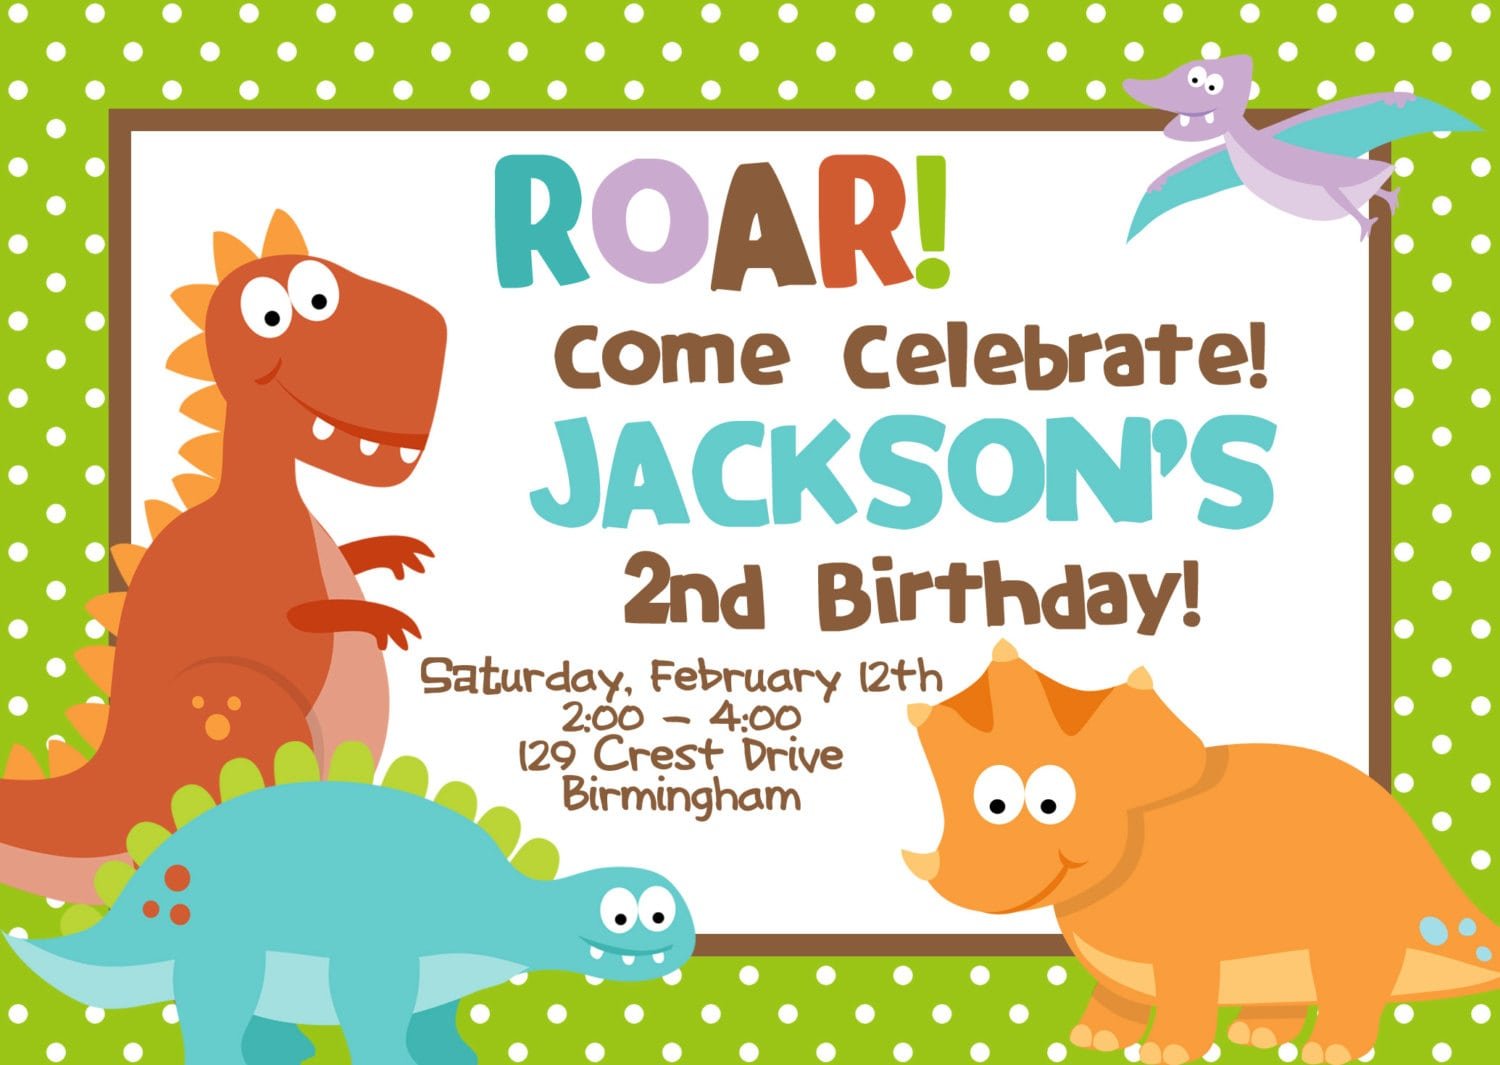 Dinosaur Themed Birthday Party Invitation Card Design Idea With